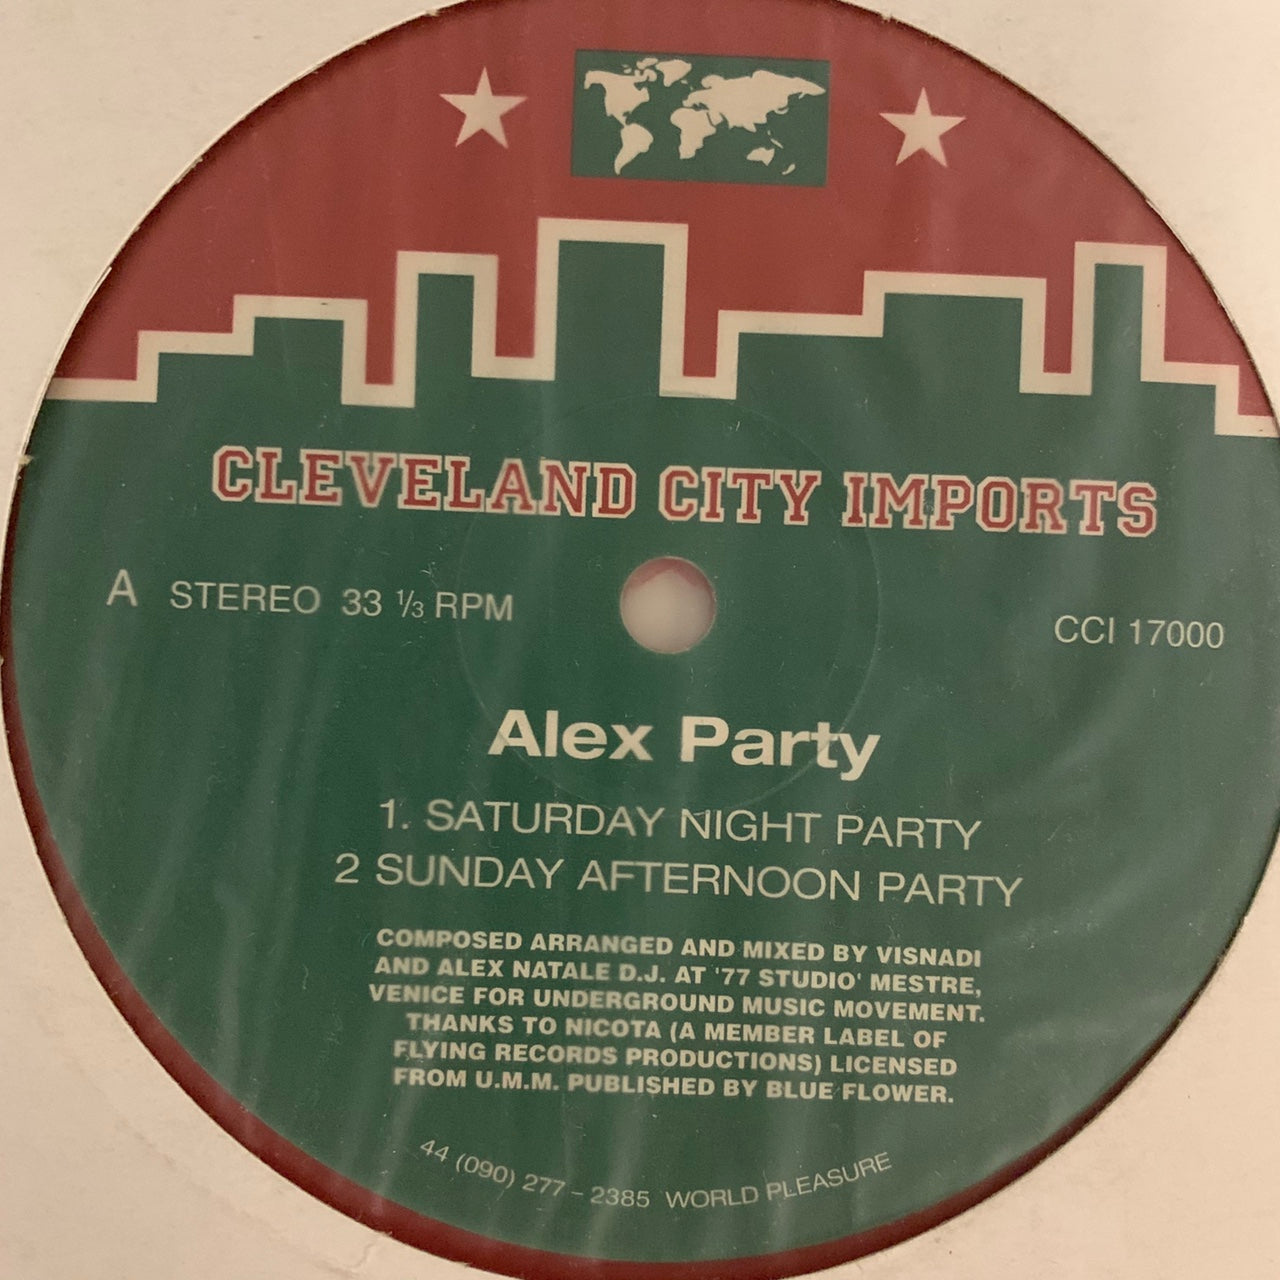 Alex Party “Saturday Night Party” 3 Track 12inch Vinyl